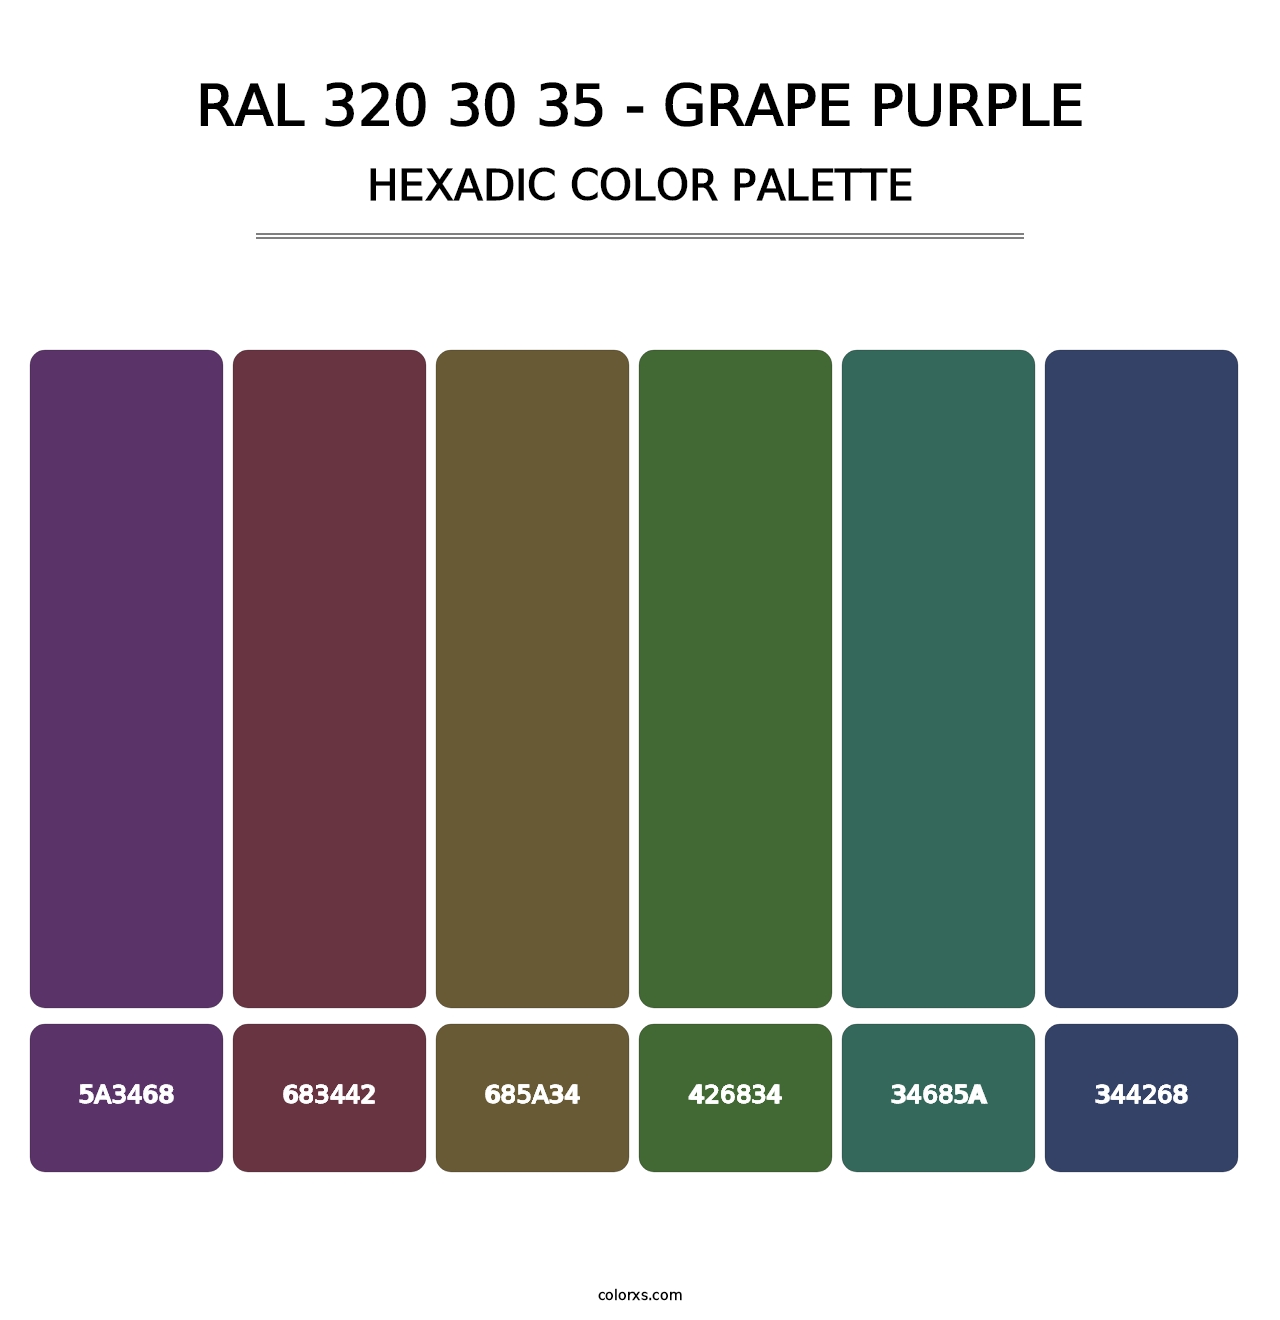 RAL 320 30 35 - Grape Purple - Hexadic Color Palette